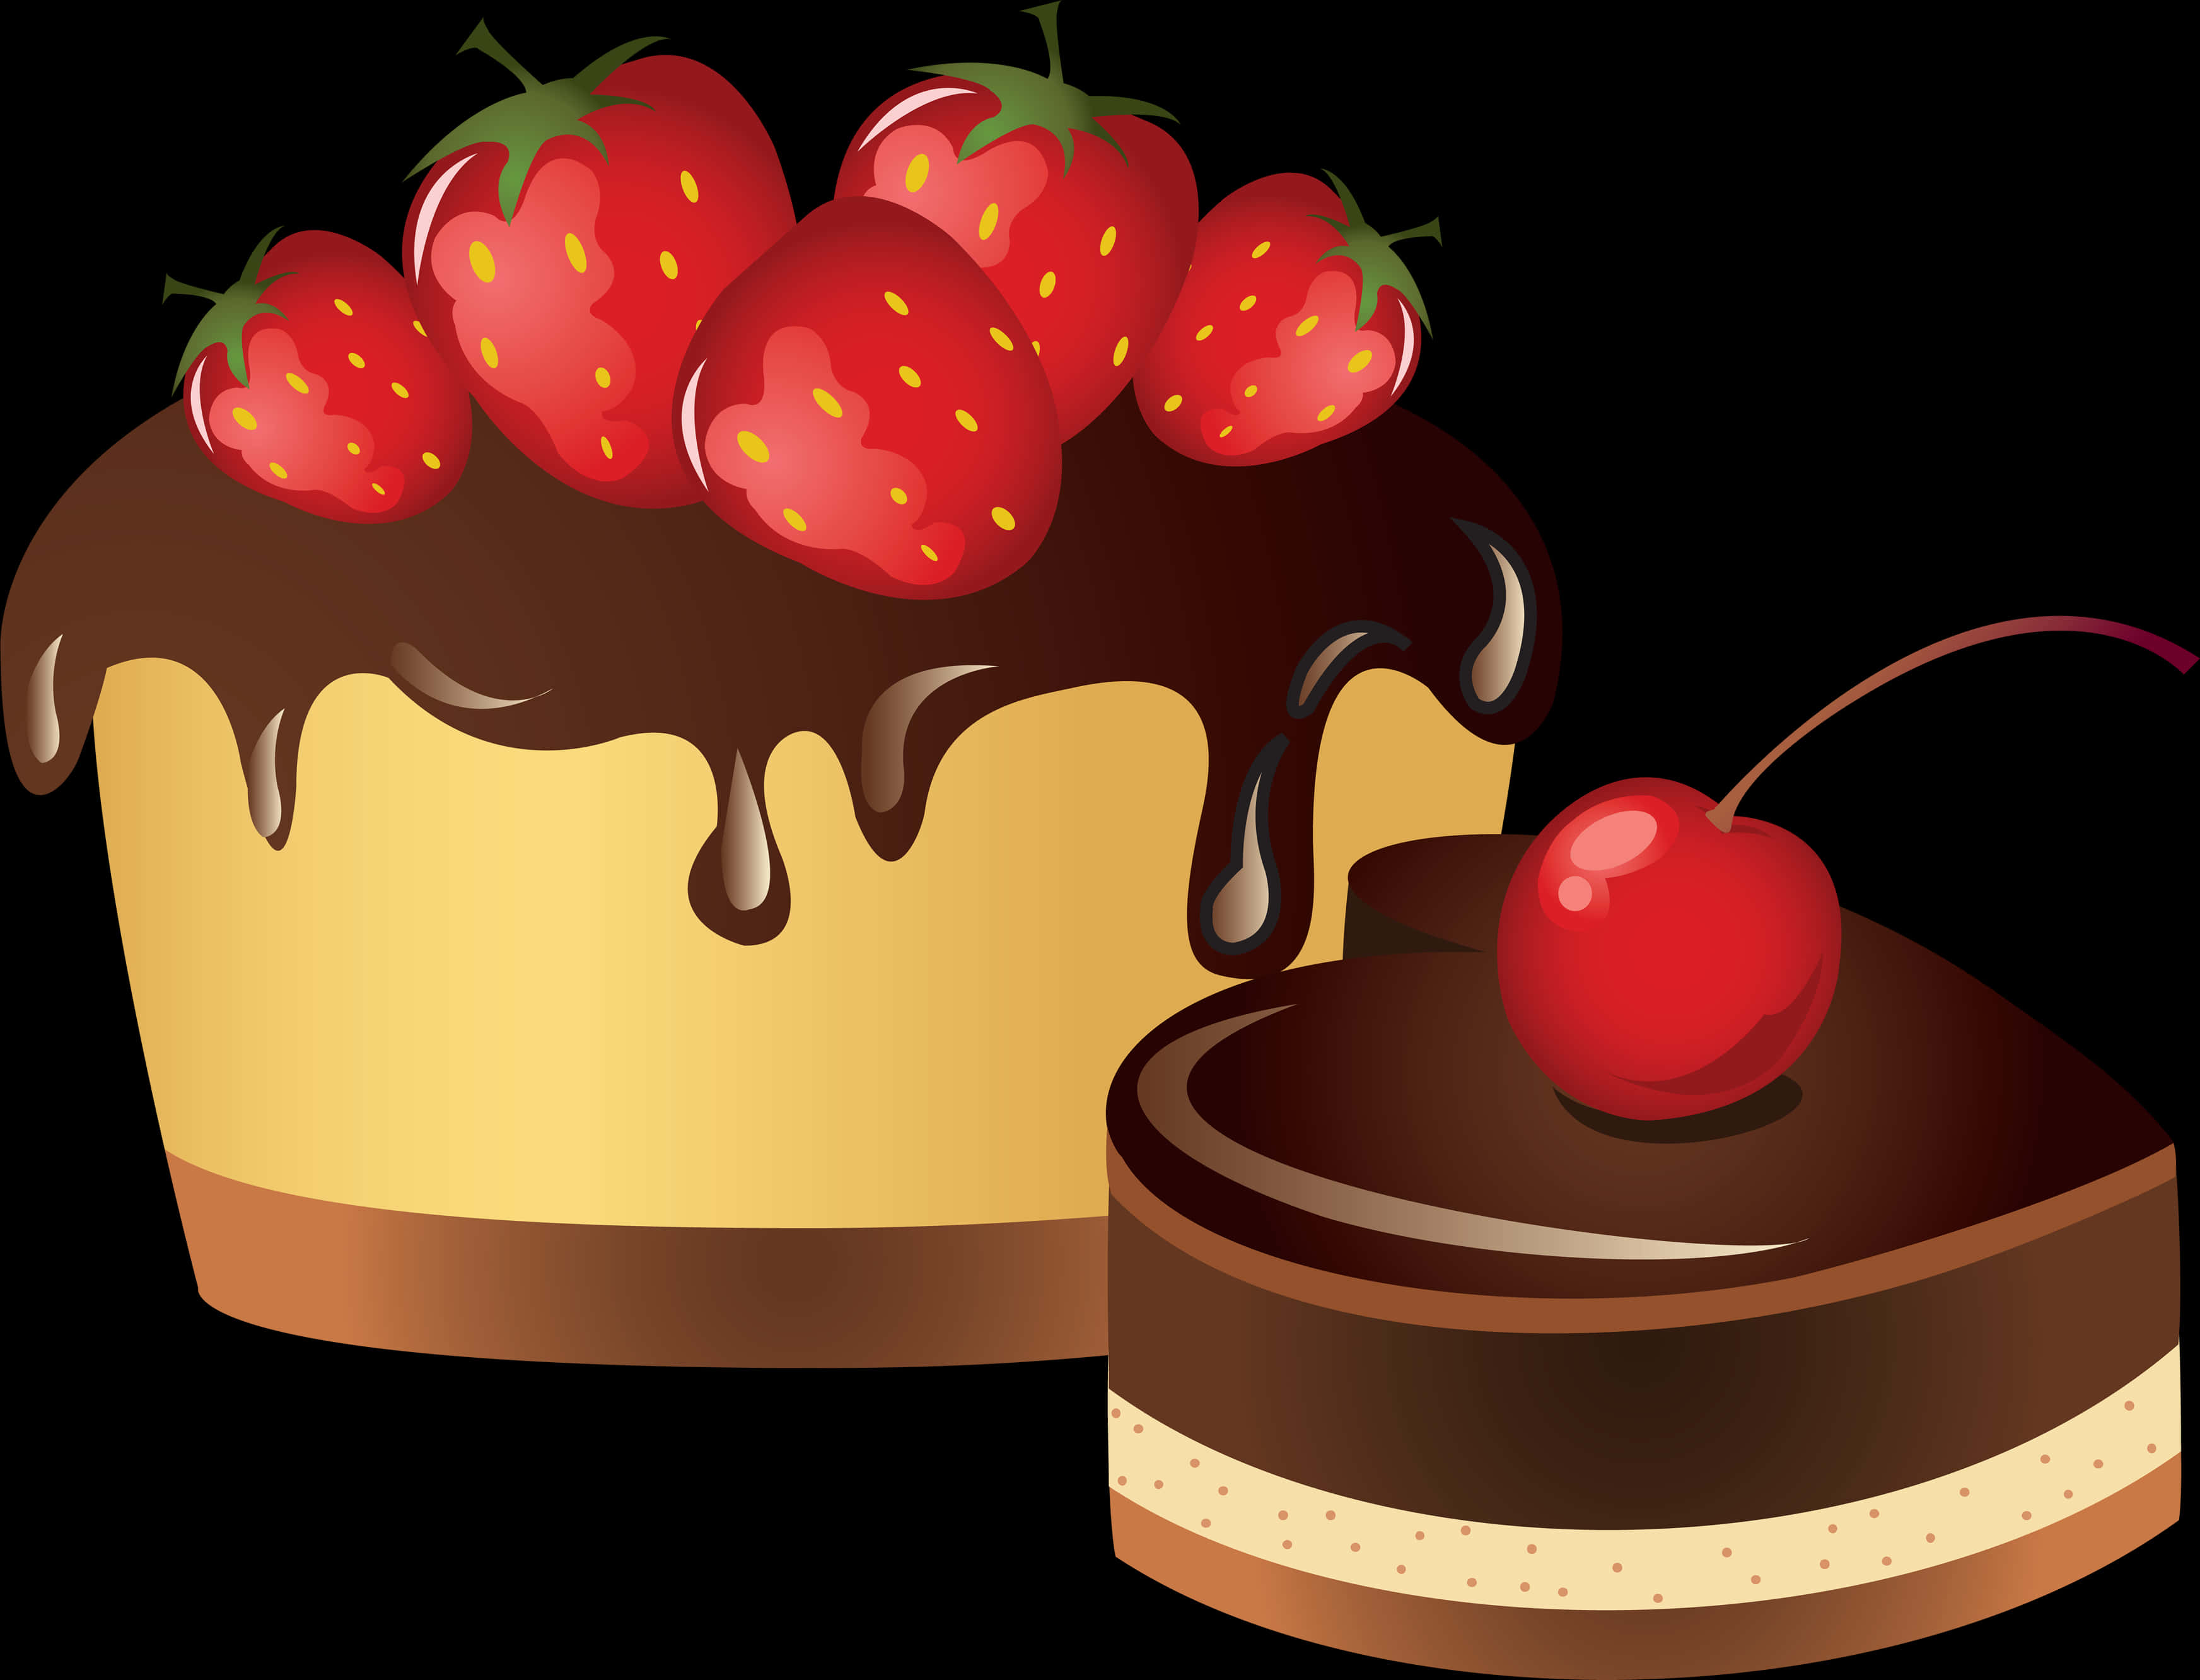 Chocolate Strawberryand Cherry Cakes Illustration PNG